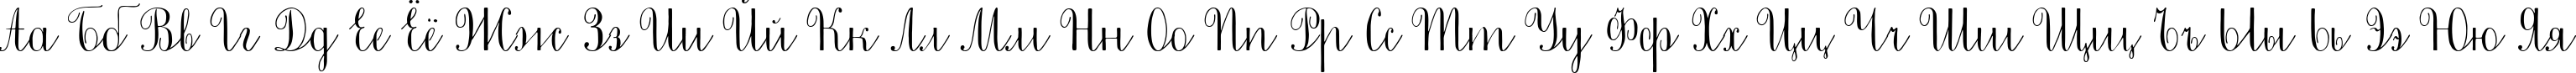 Пример написания русского алфавита шрифтом Little Cecily